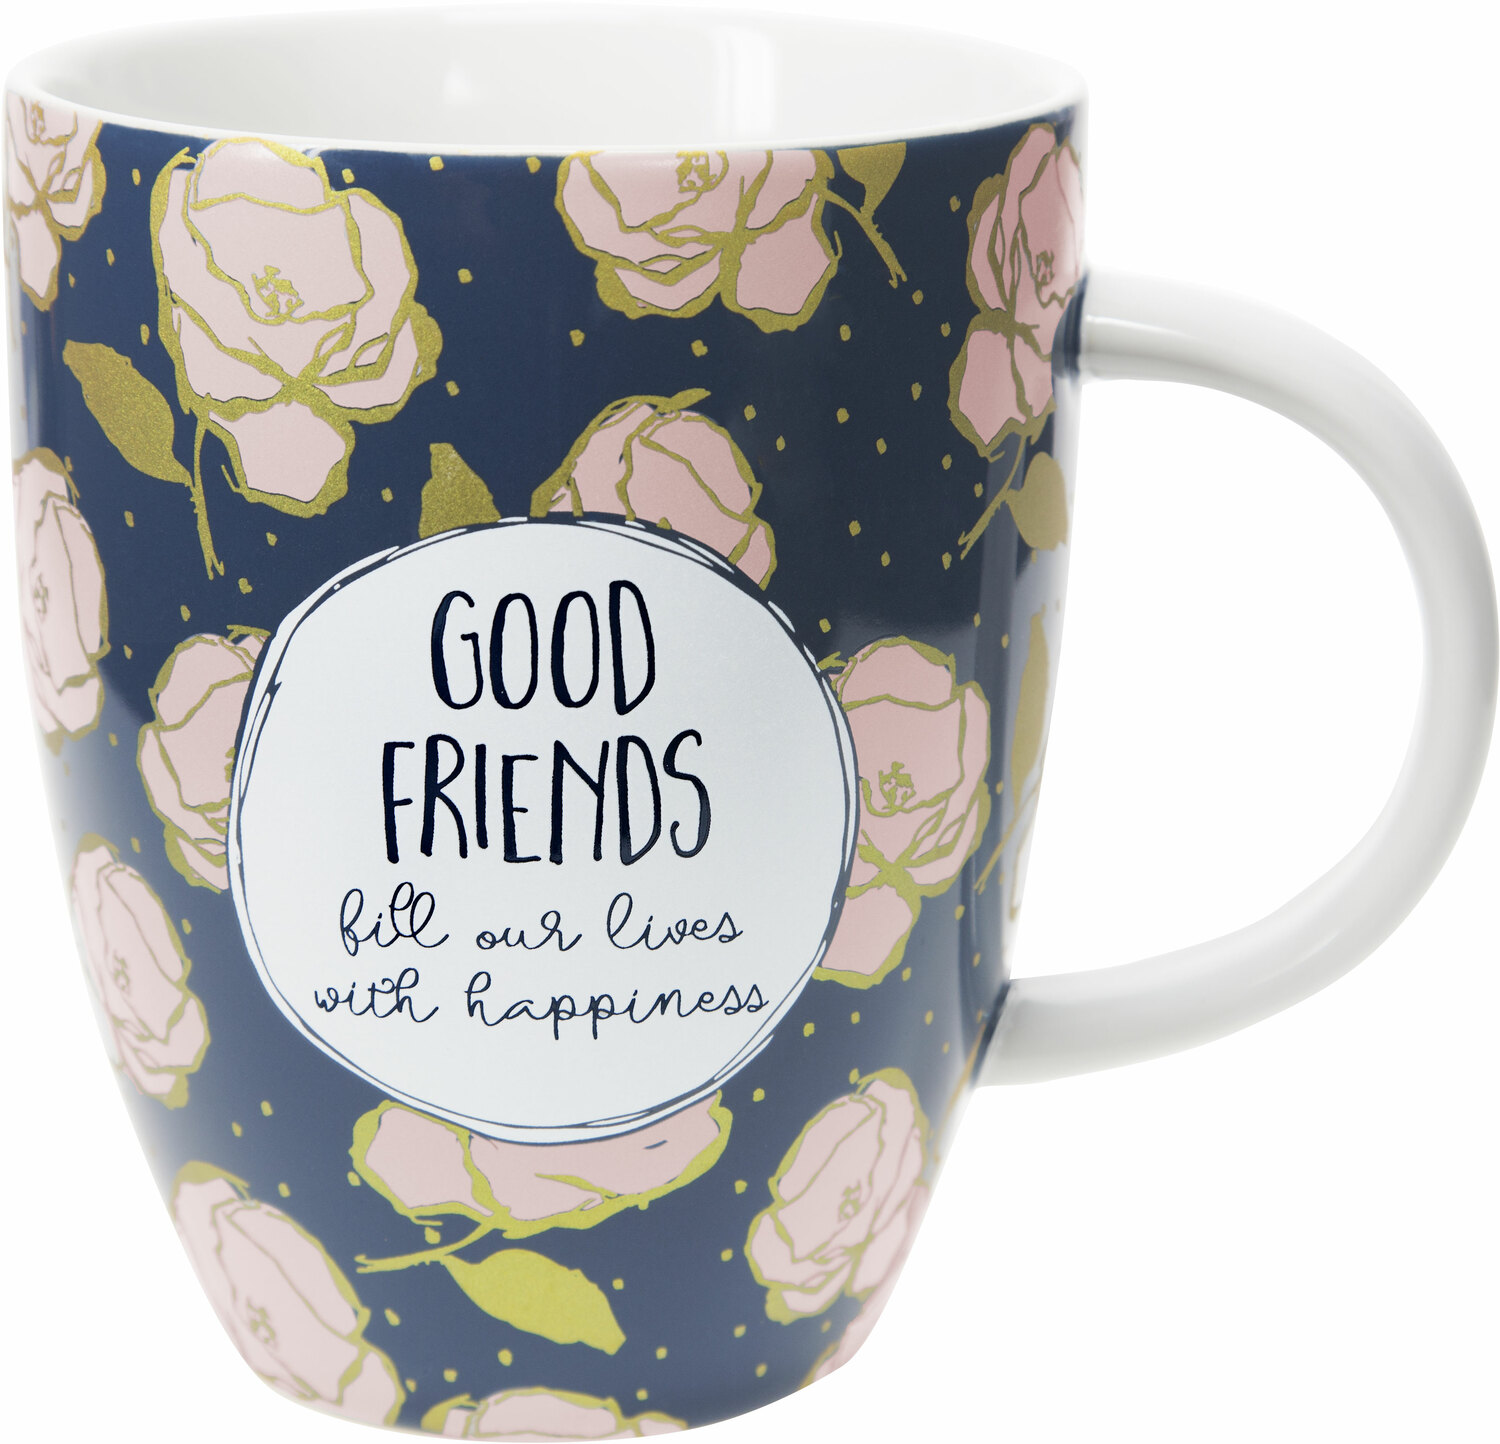 Good Friends by Heartful Love - Good Friends - 20 oz Cup